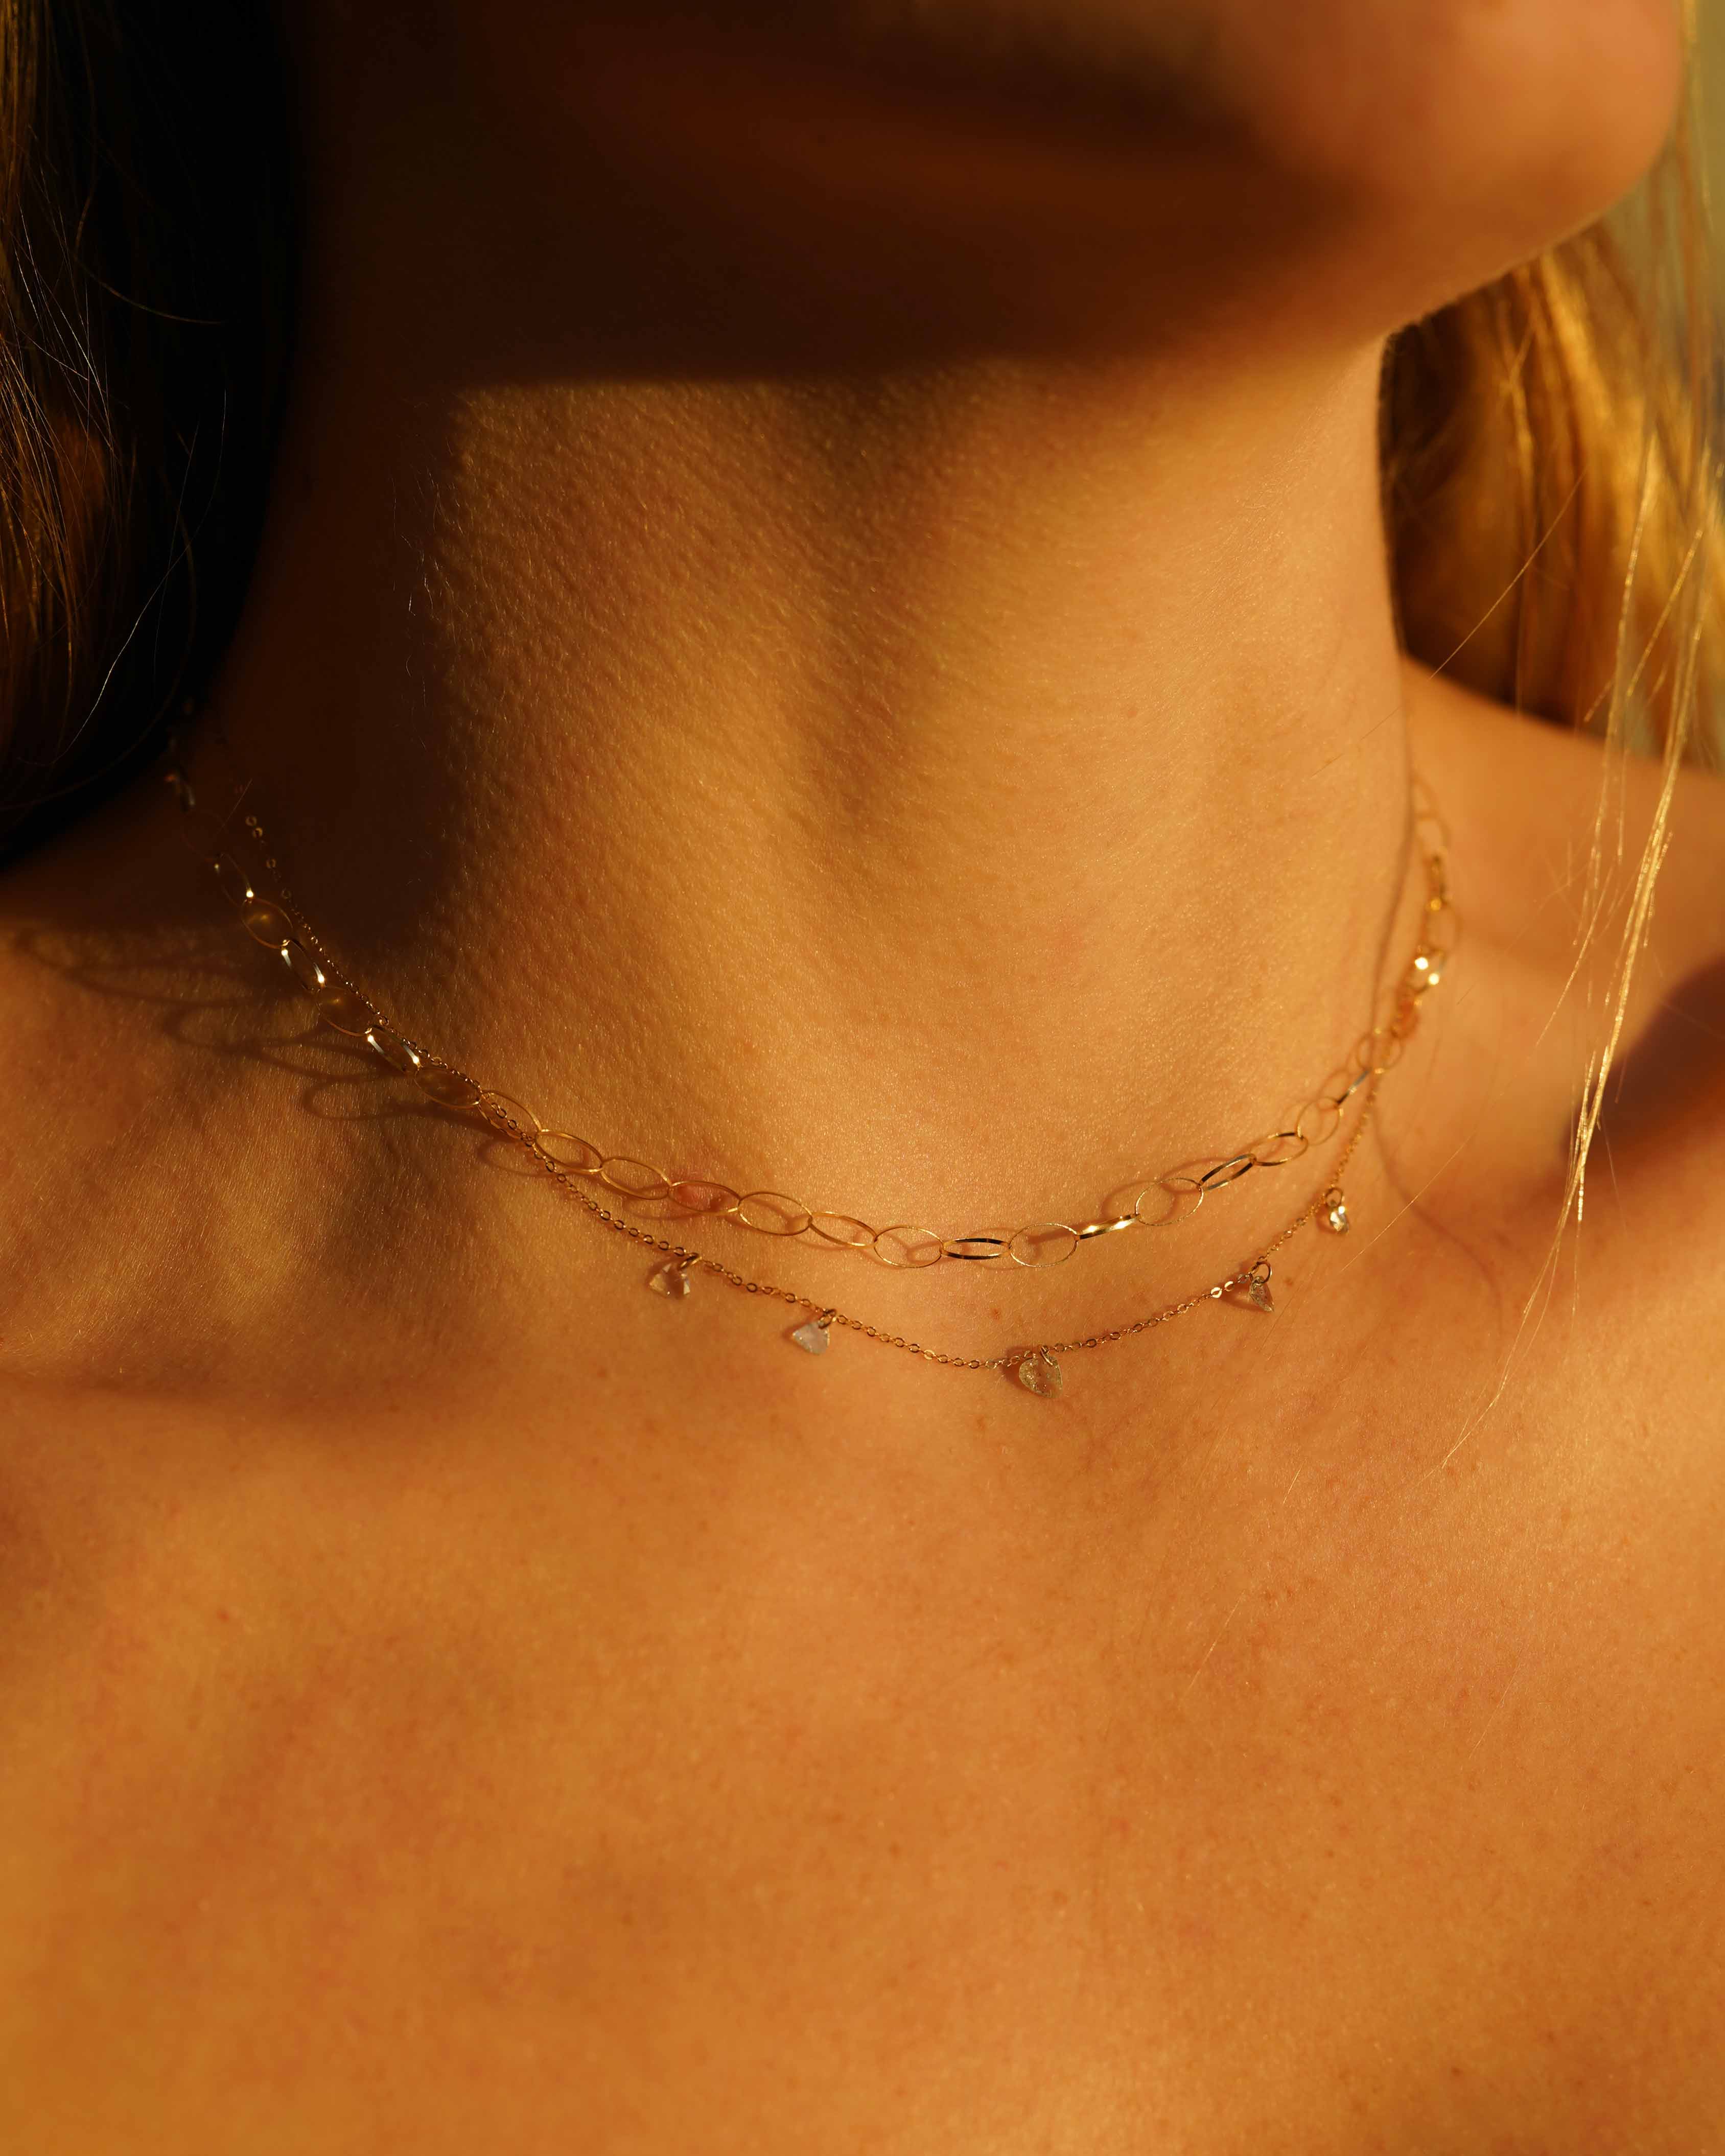 Cambridge Necklace